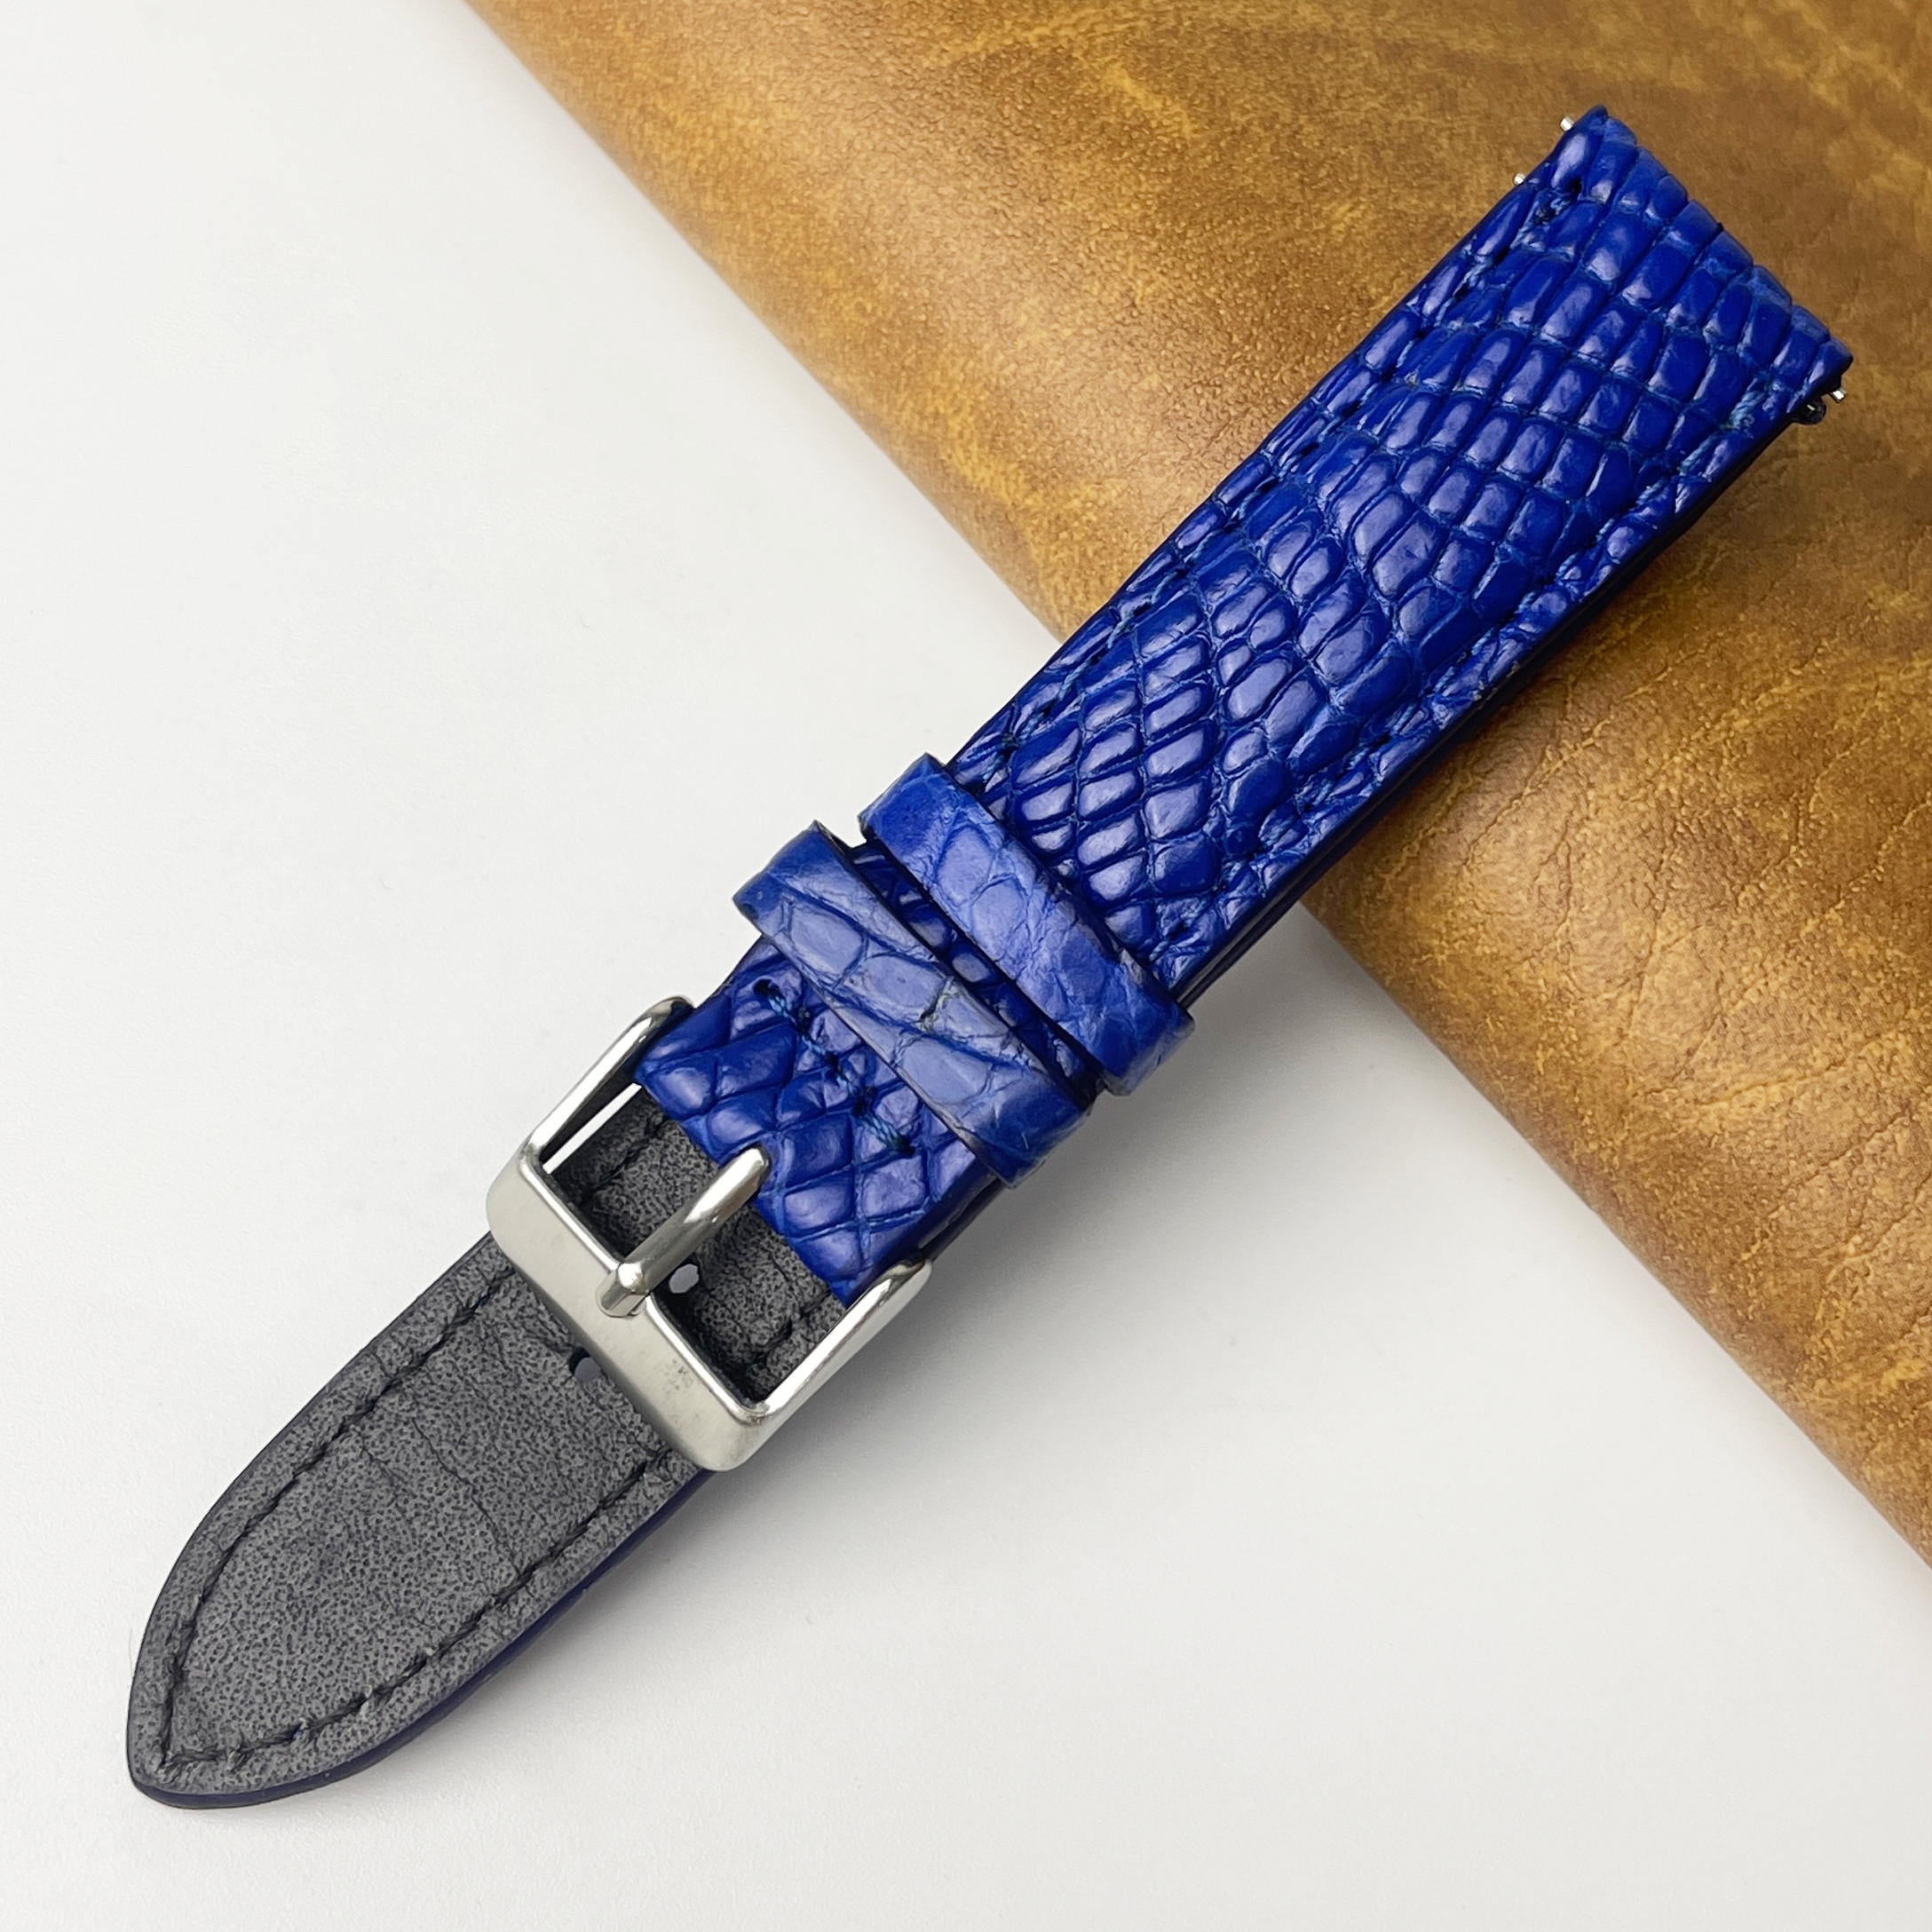 blue unique pattern alligator watch band for men